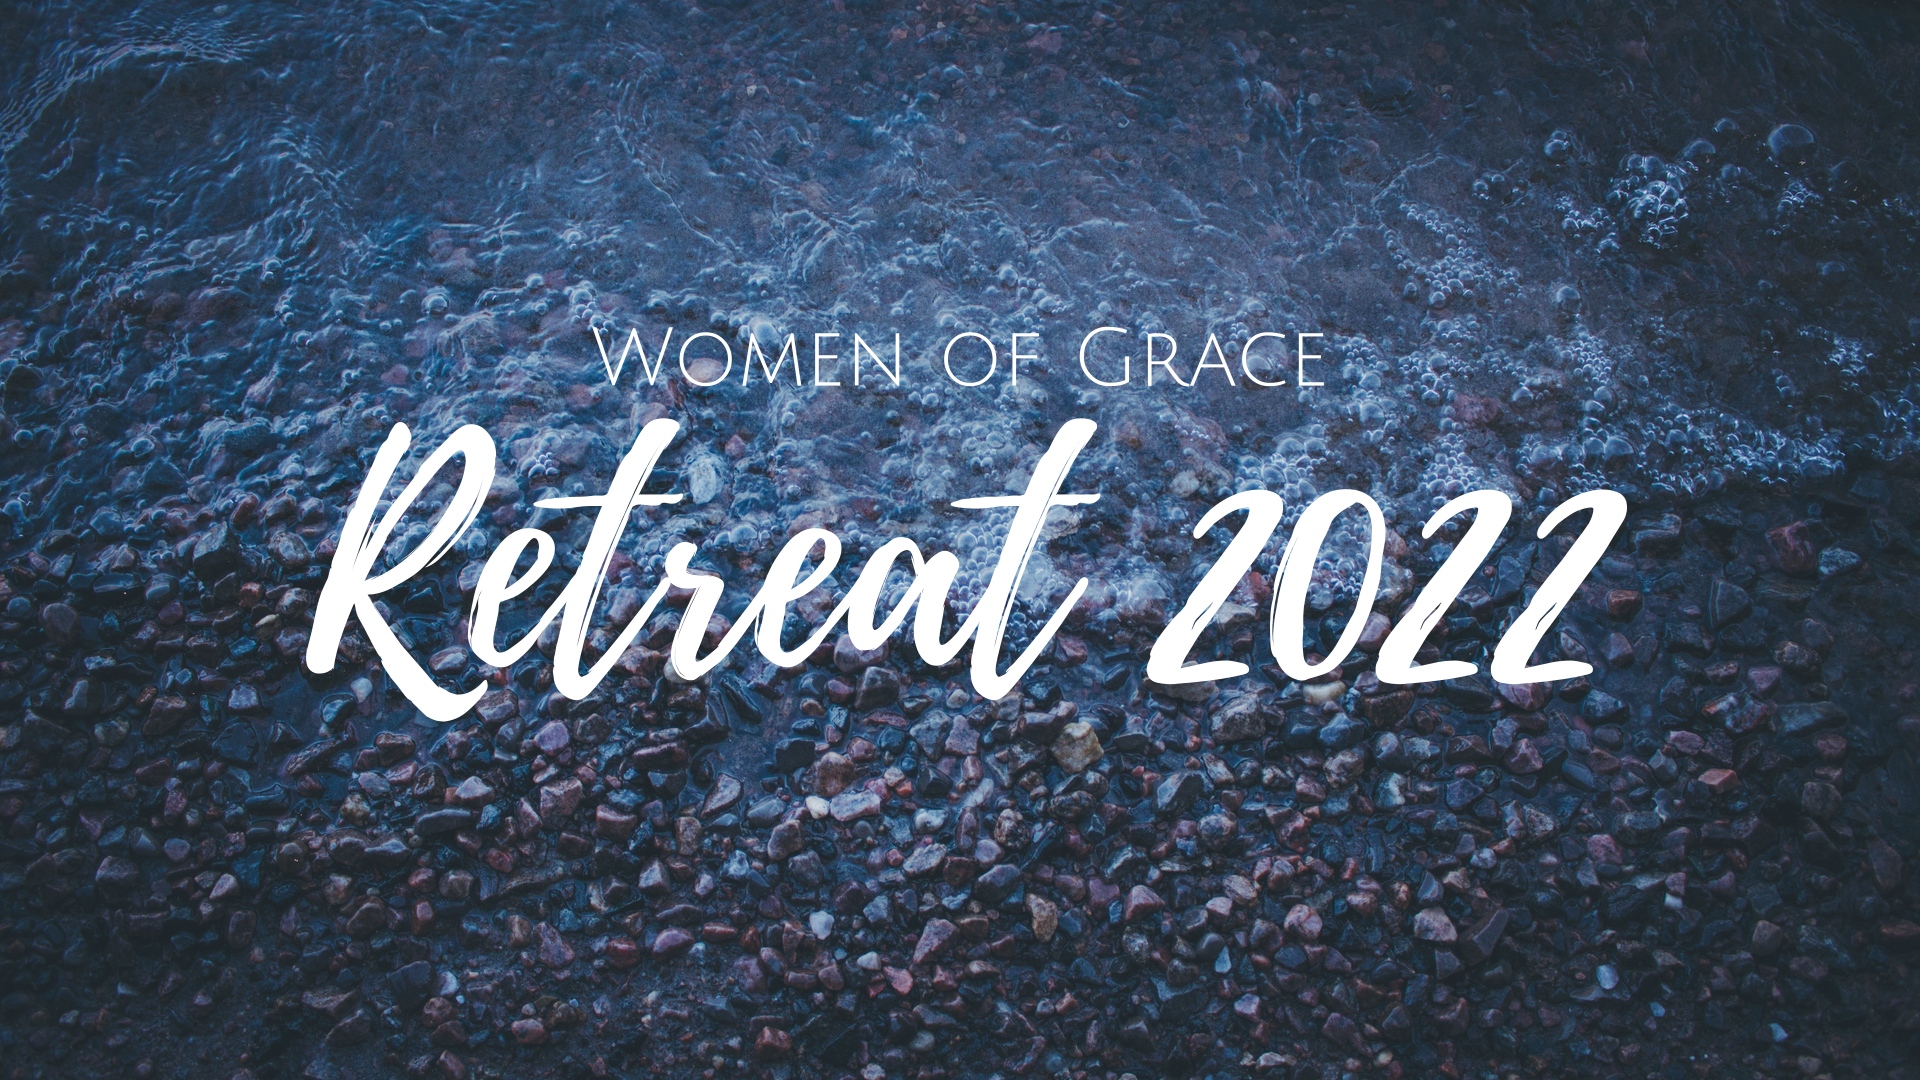 Women's Retreat 2022 Grace Community Church